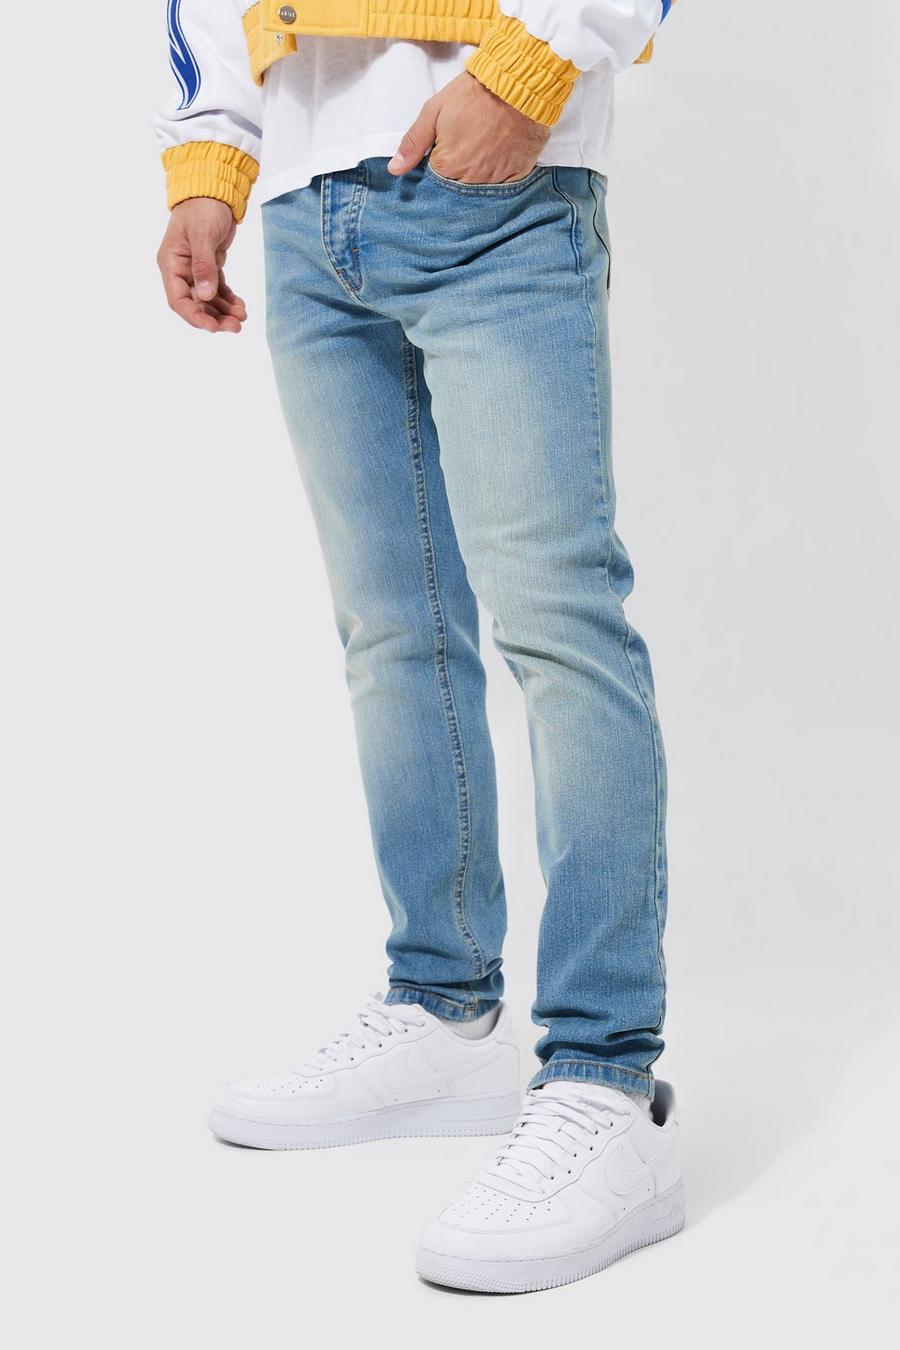 Jeans Stretch Skinny Fit, Antique blue